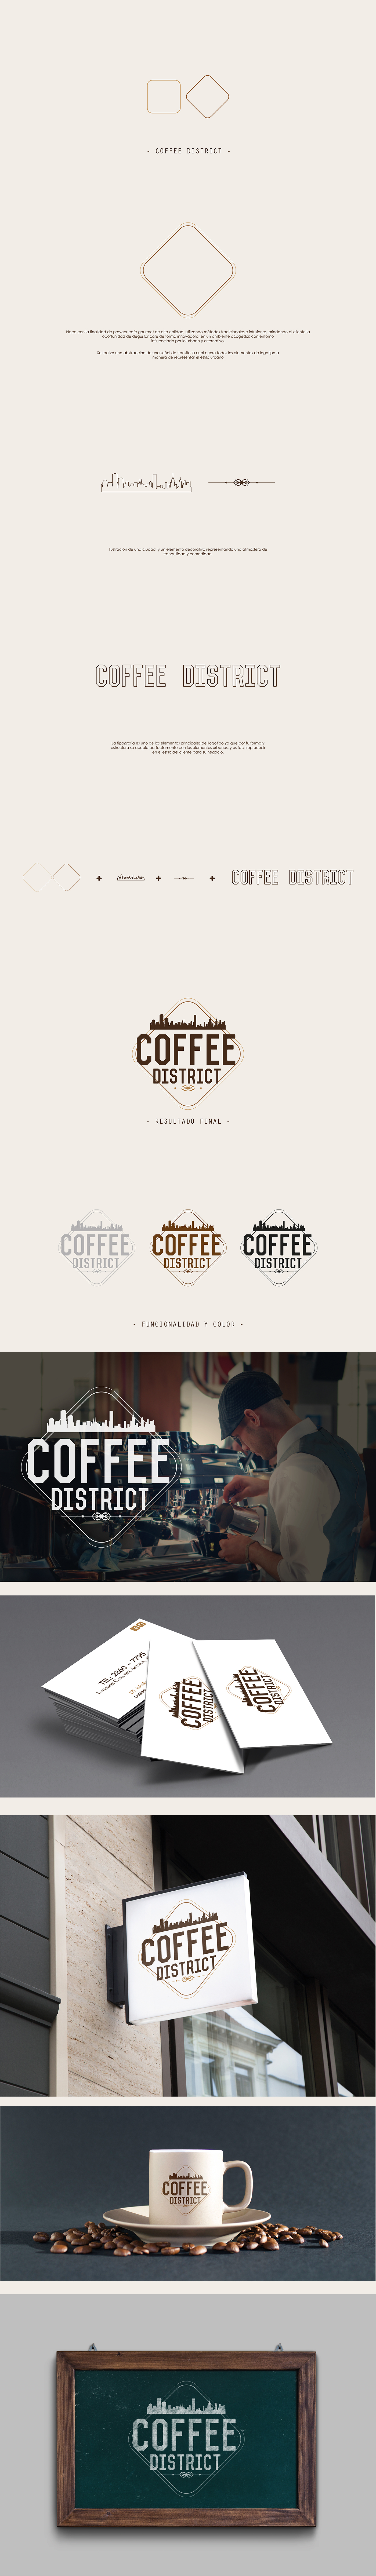 Logotipo Coffee district branding  vectors logo desing gourmet